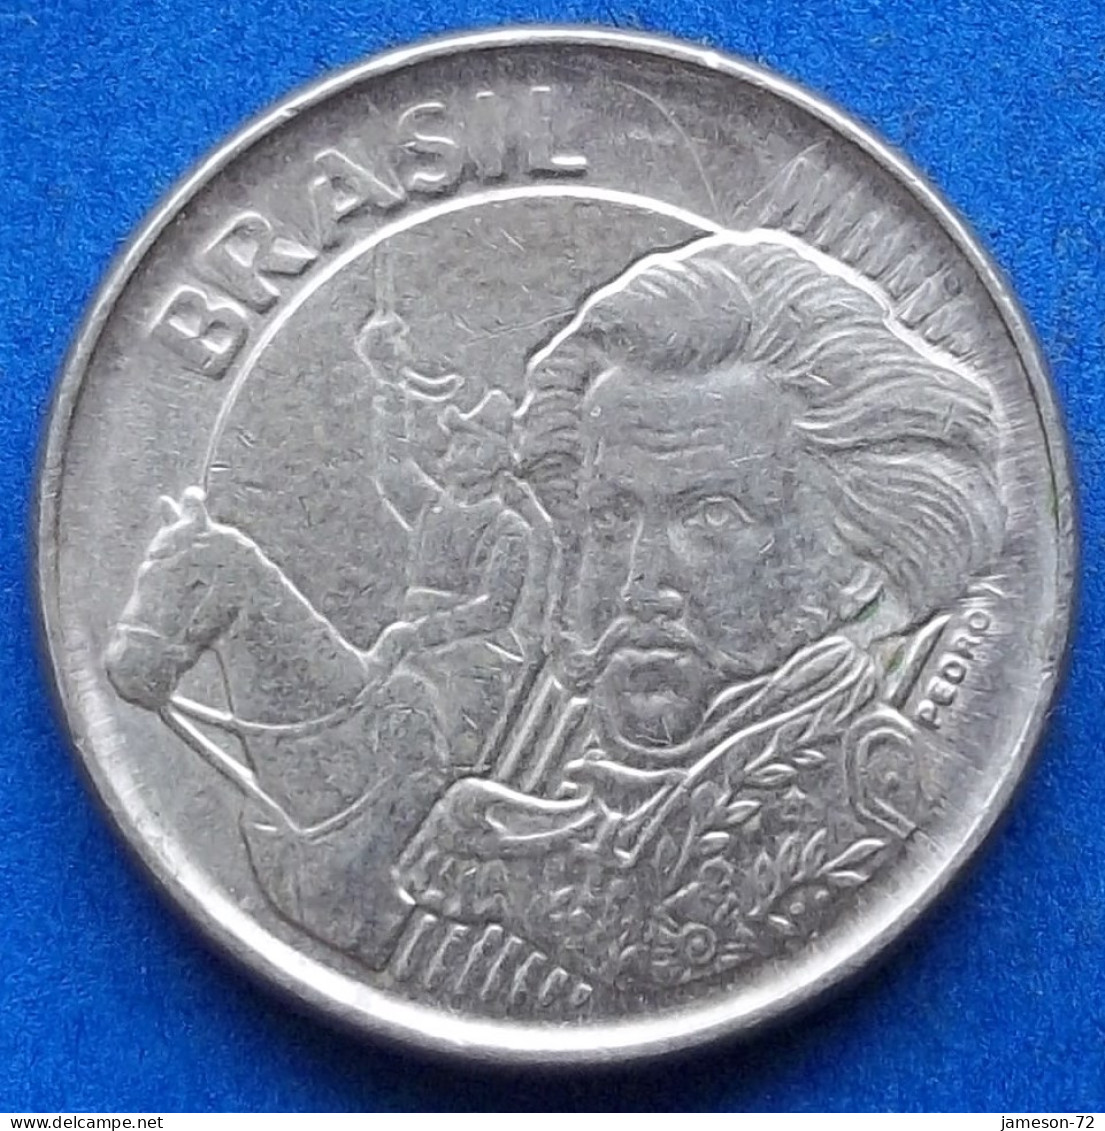 BRAZIL - 10 Centavos 2019 "Pedro I" KM# 649.2 Monetary Reform (1994) - Edelweiss Coins - Brazil